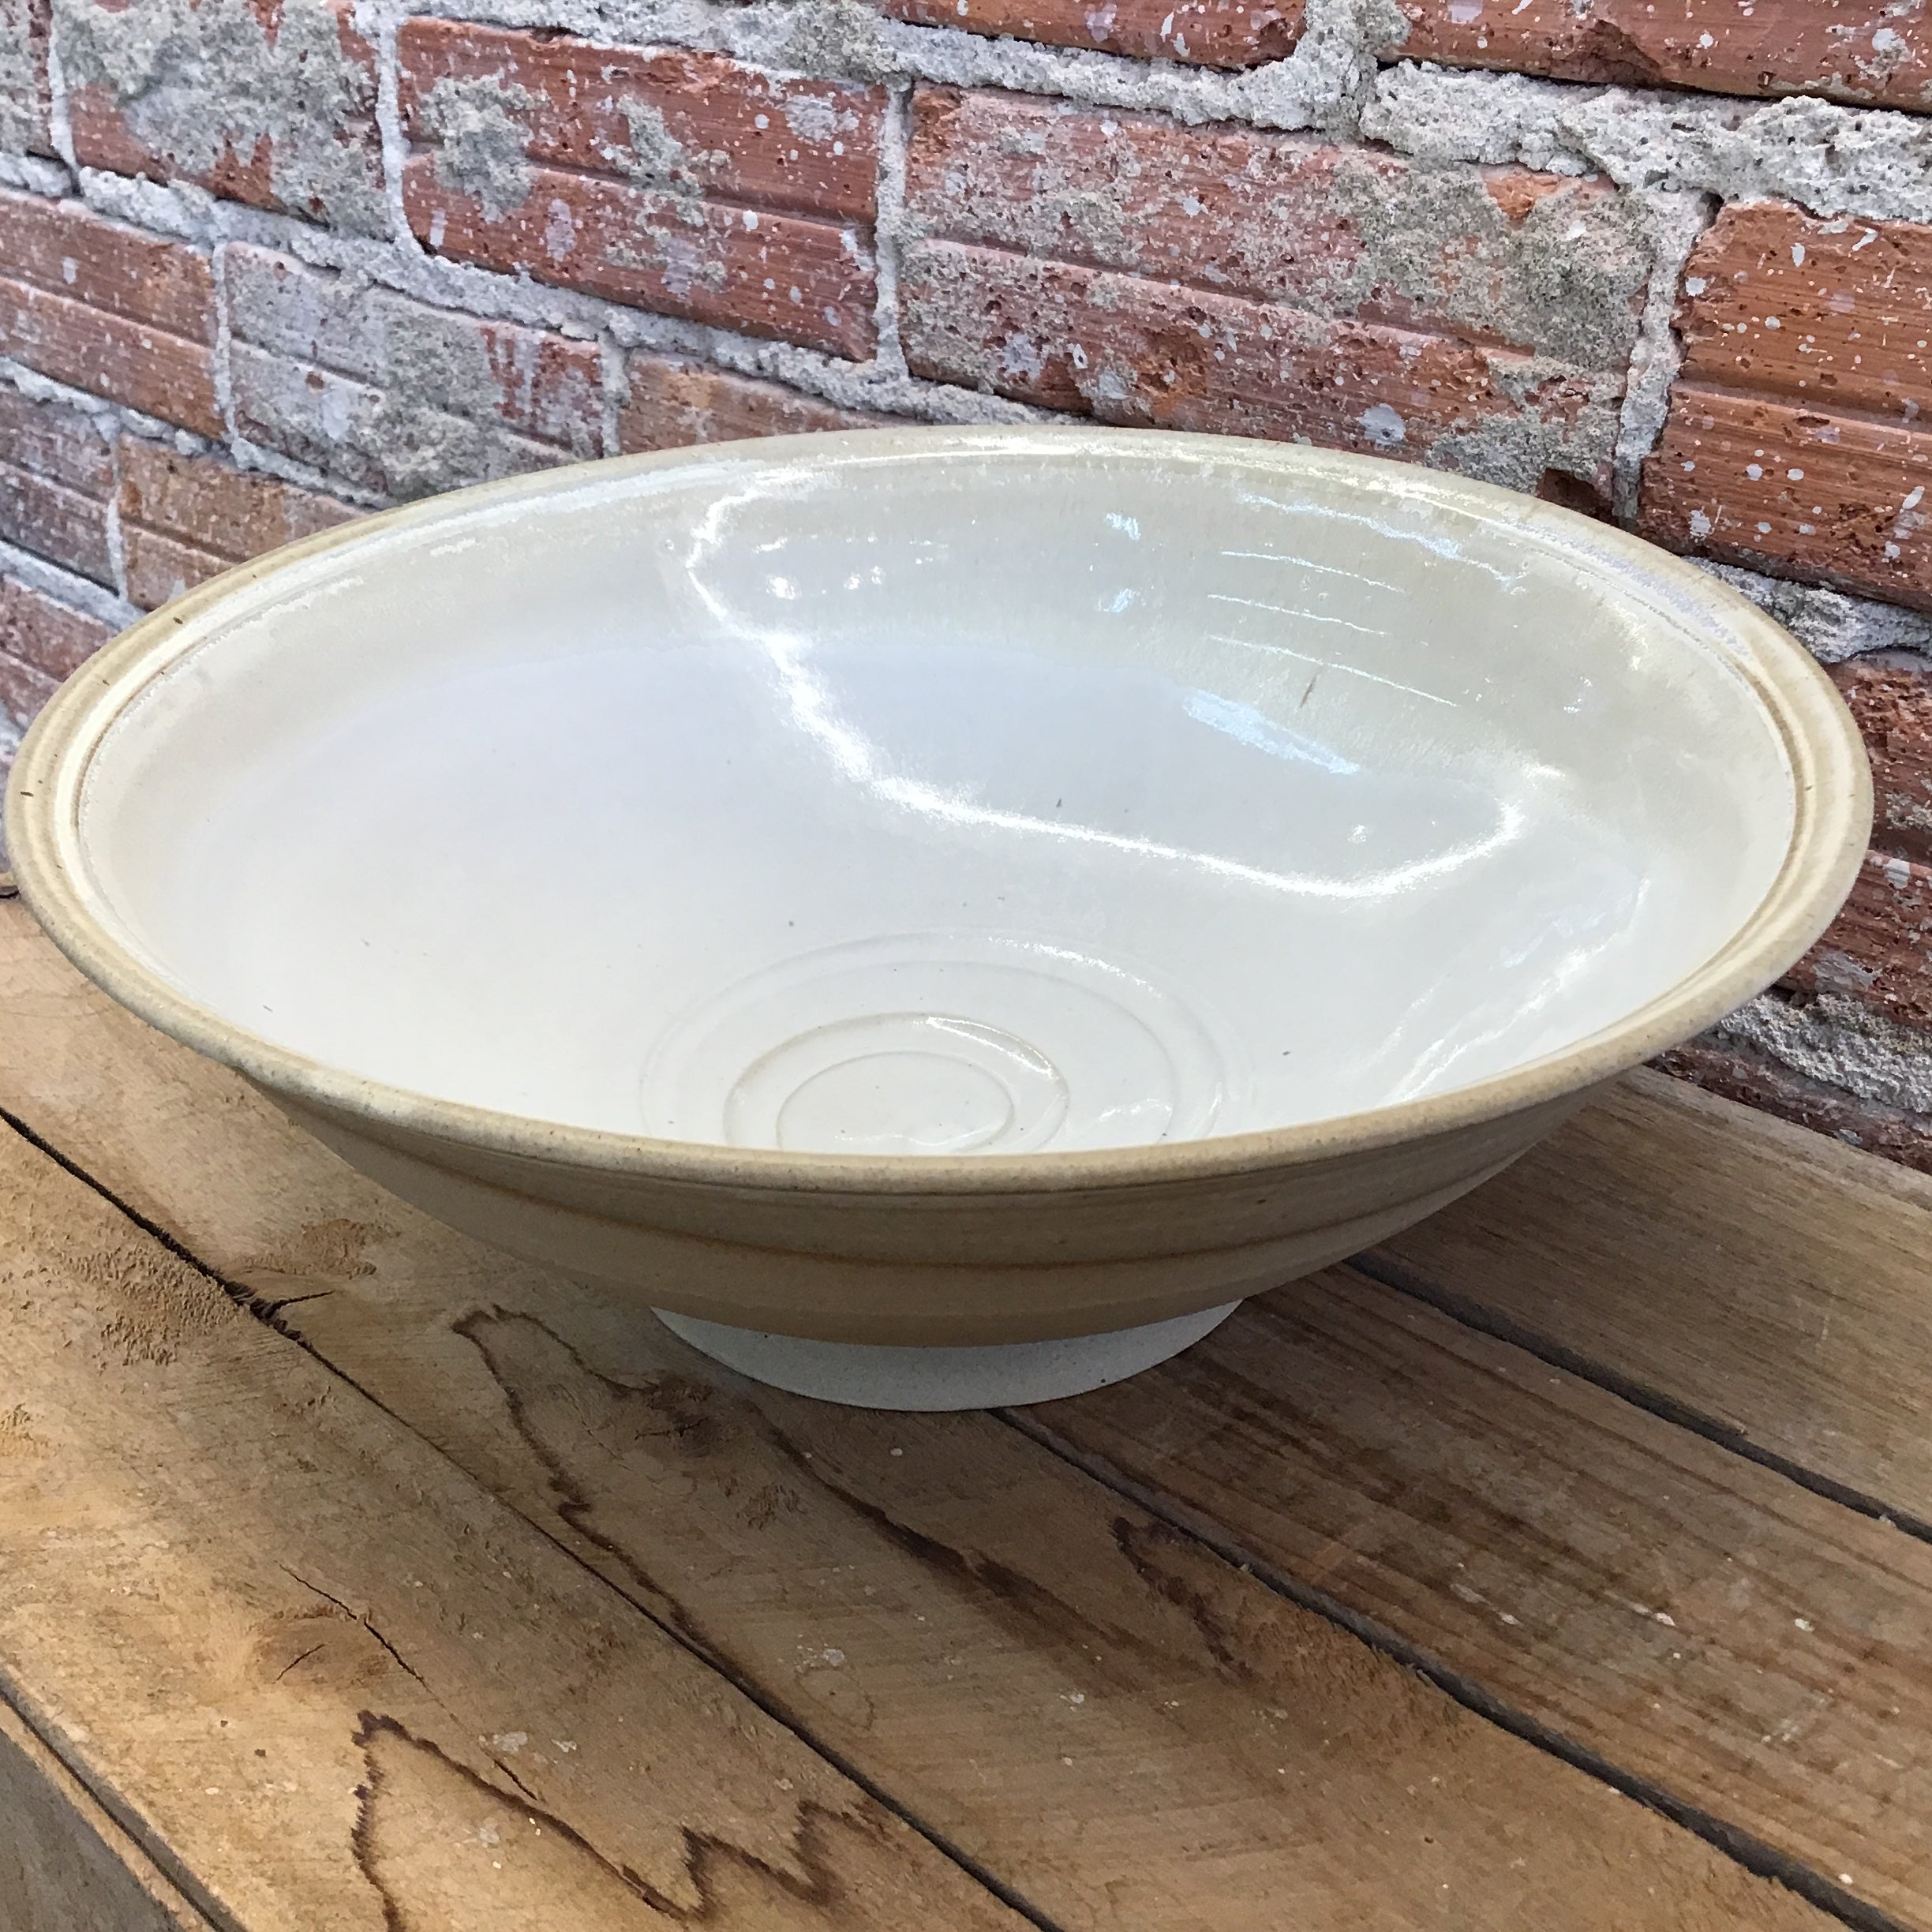 Deep Swirl serving bowl